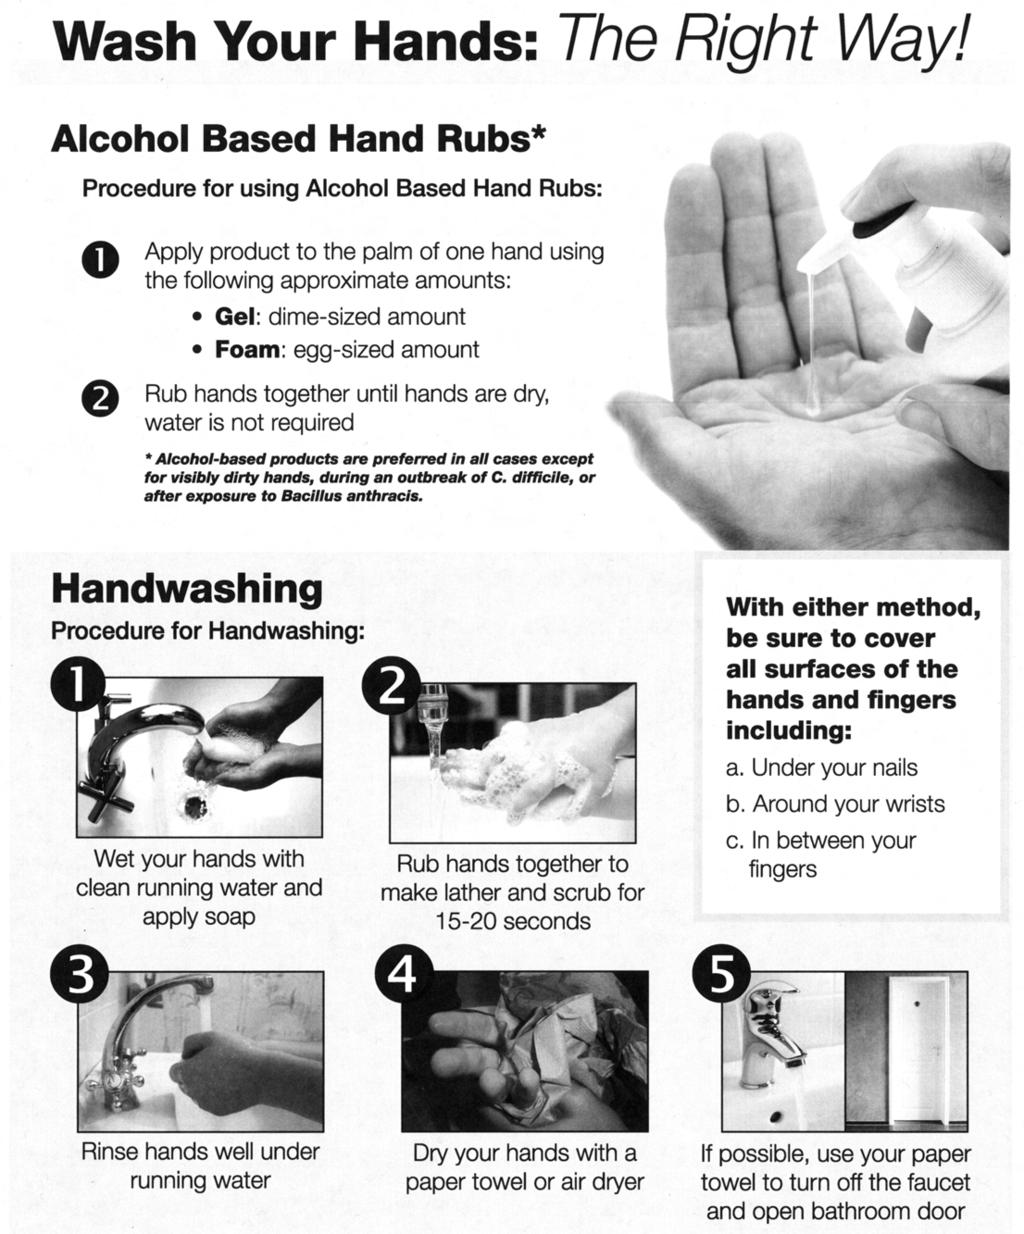 Figure 9.1. Sample hand hygiene educational material. Source: APIC.